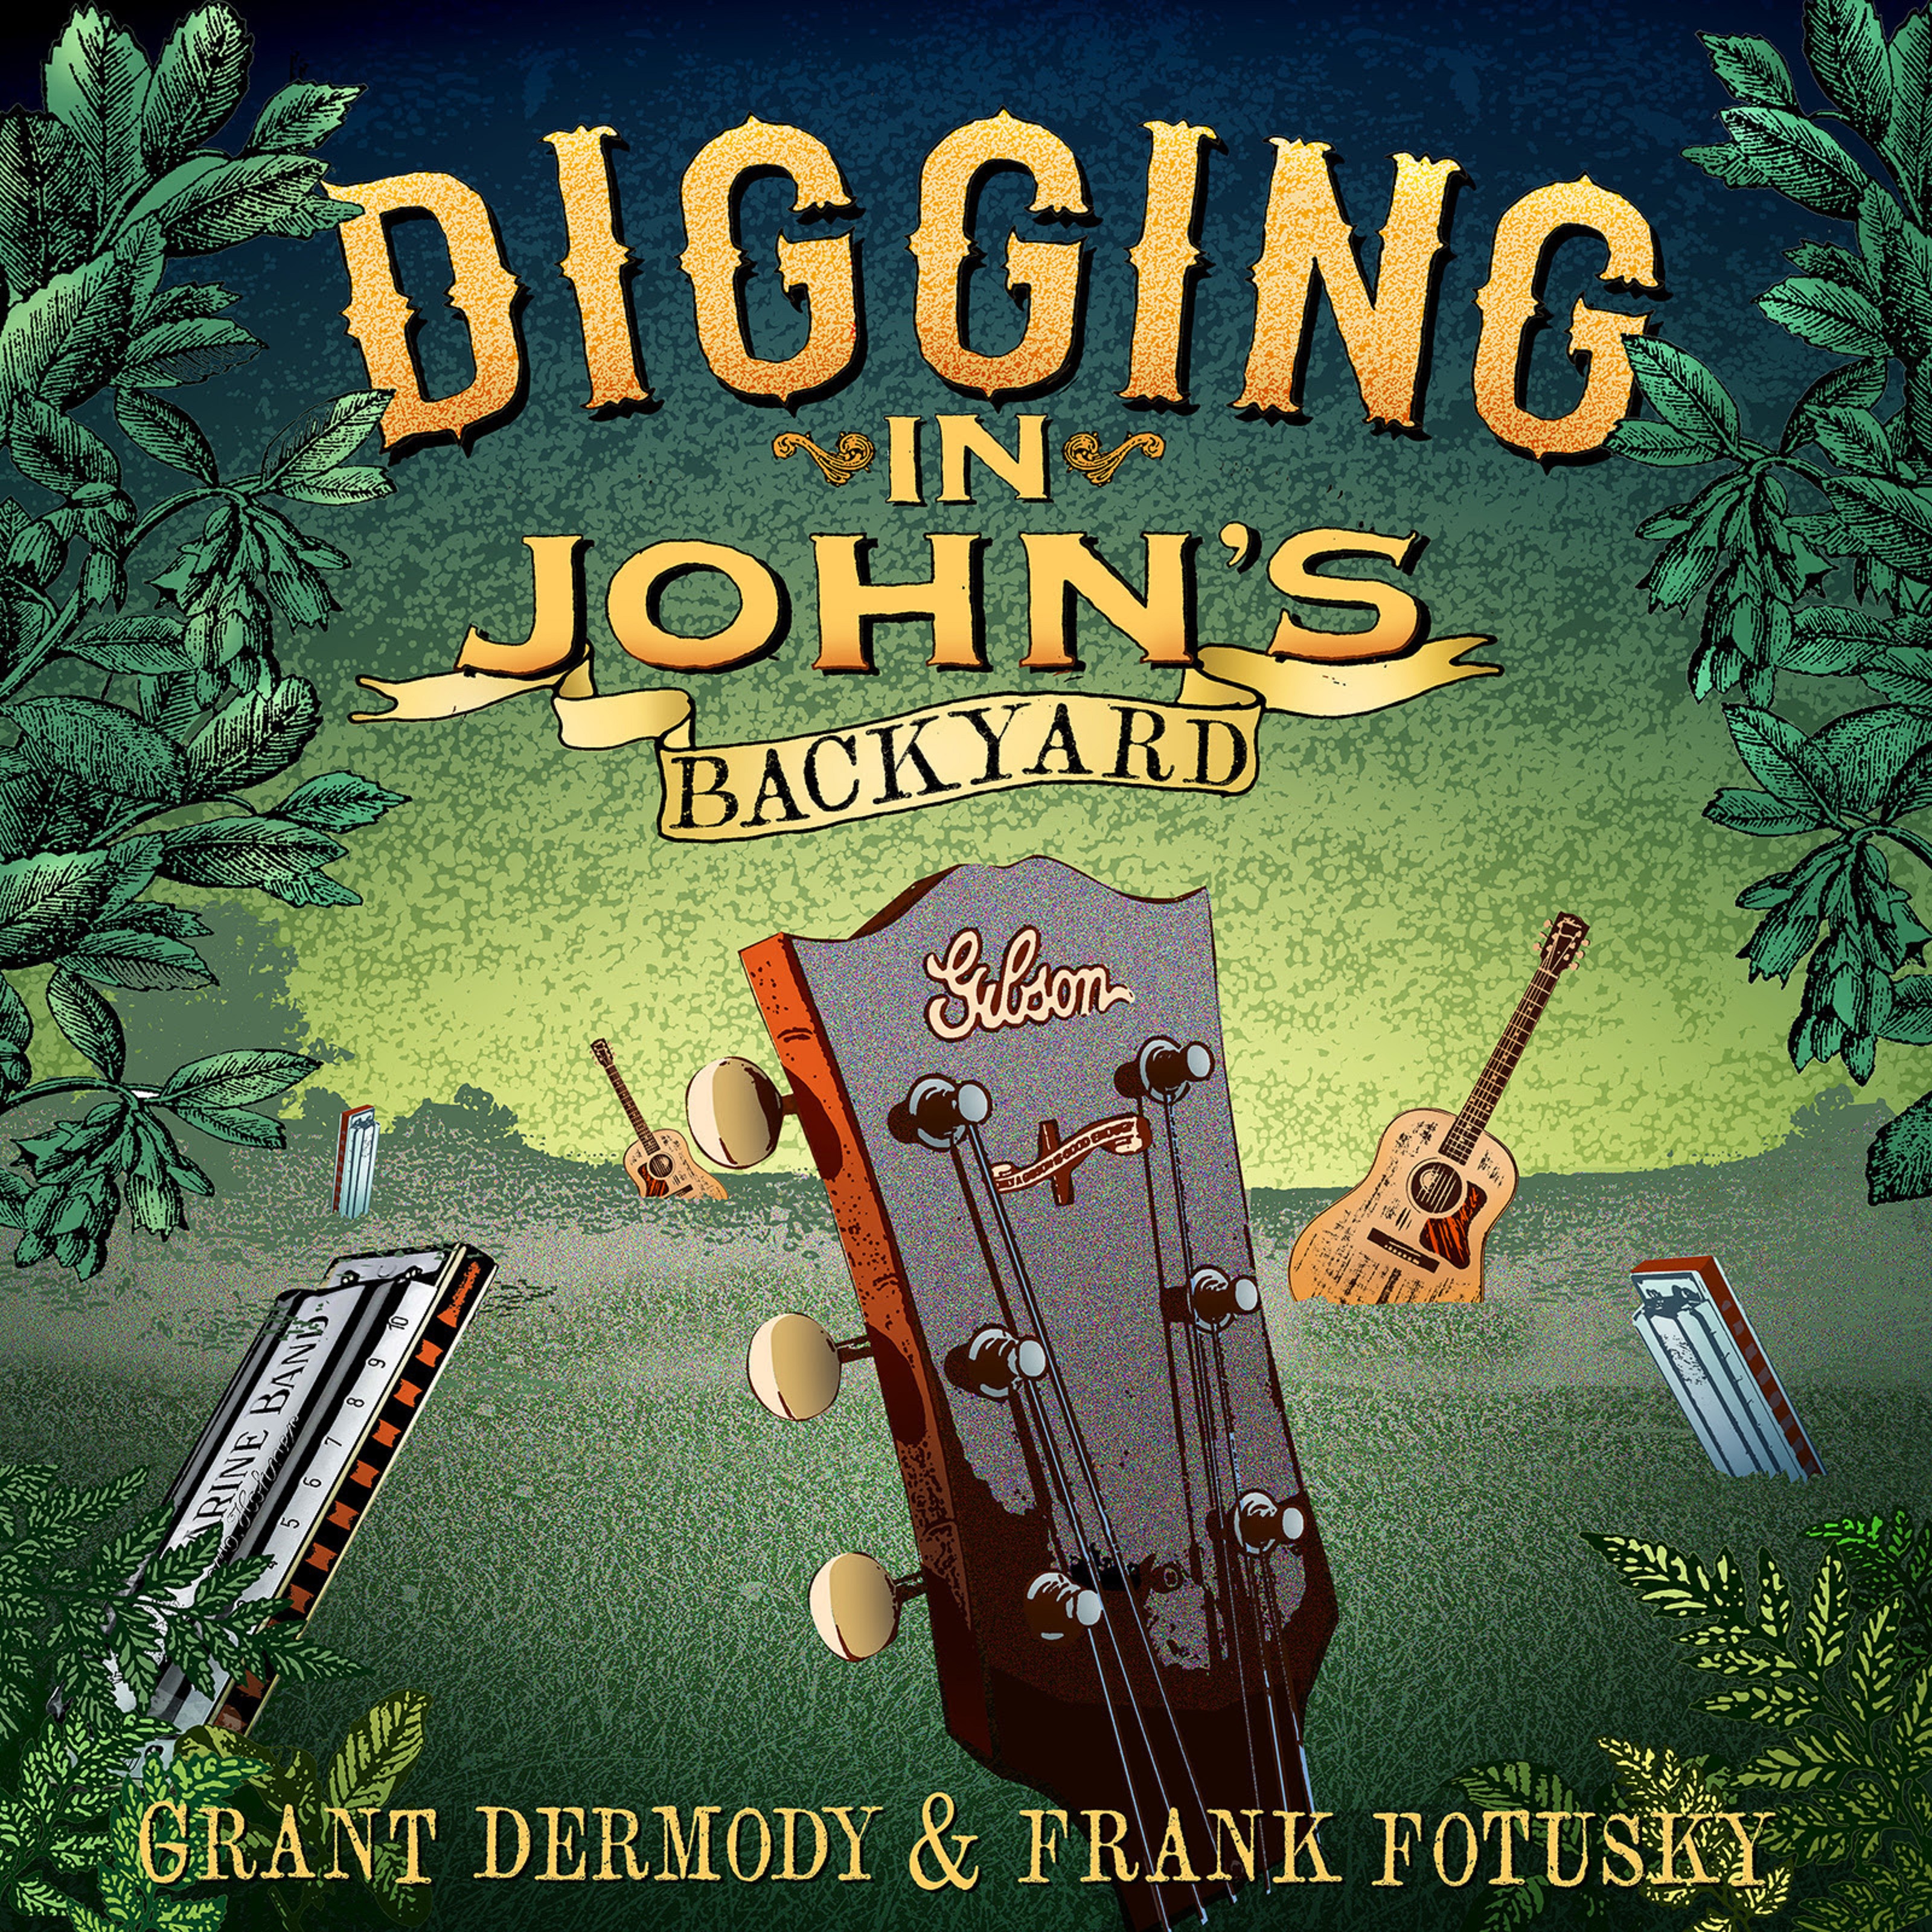 Grant Dermody& Frank Fotusky Reimagine the Music of John Jackson